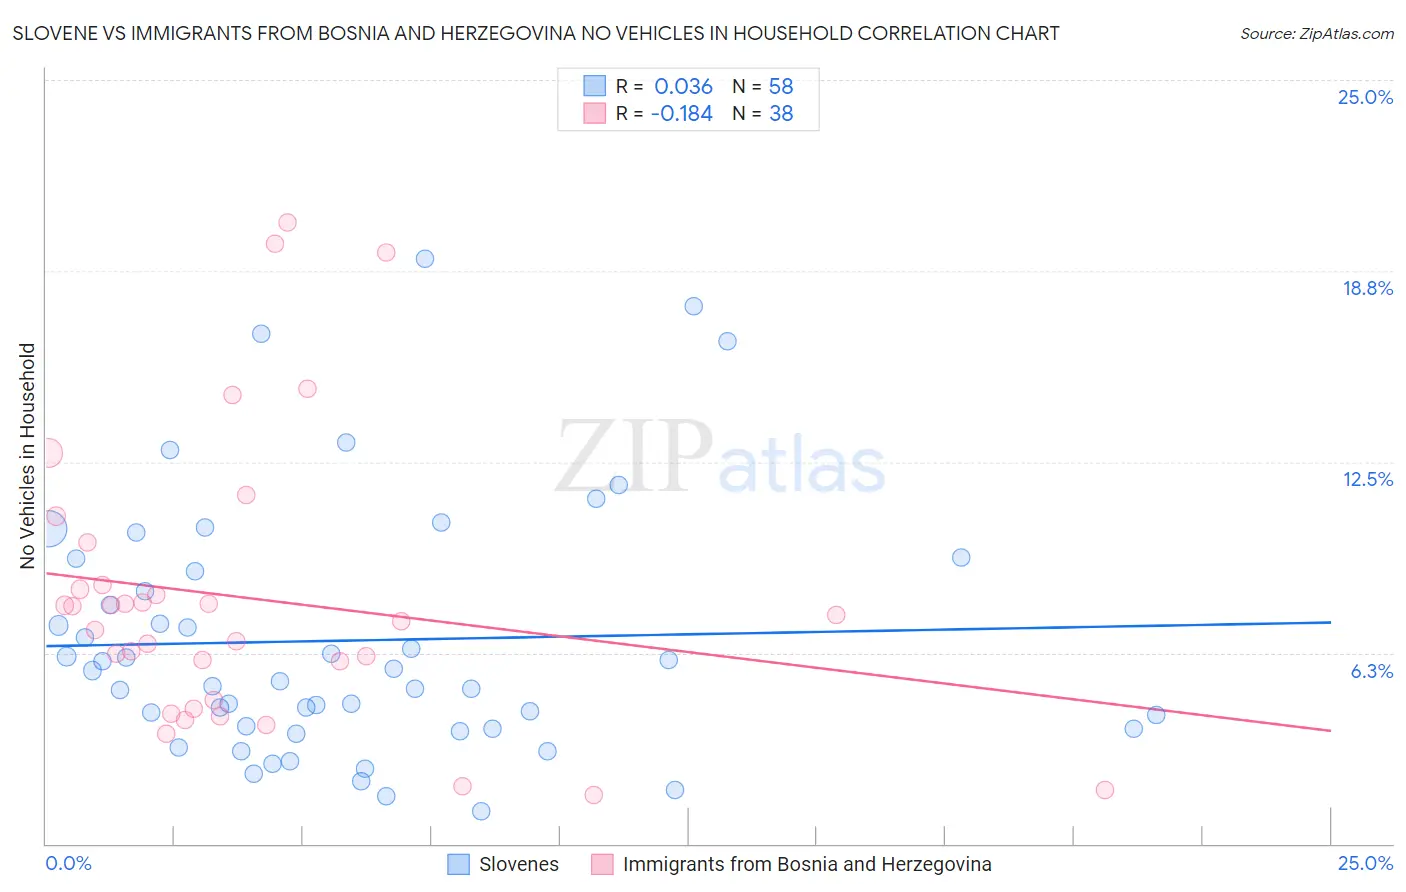 Slovene vs Immigrants from Bosnia and Herzegovina No Vehicles in Household